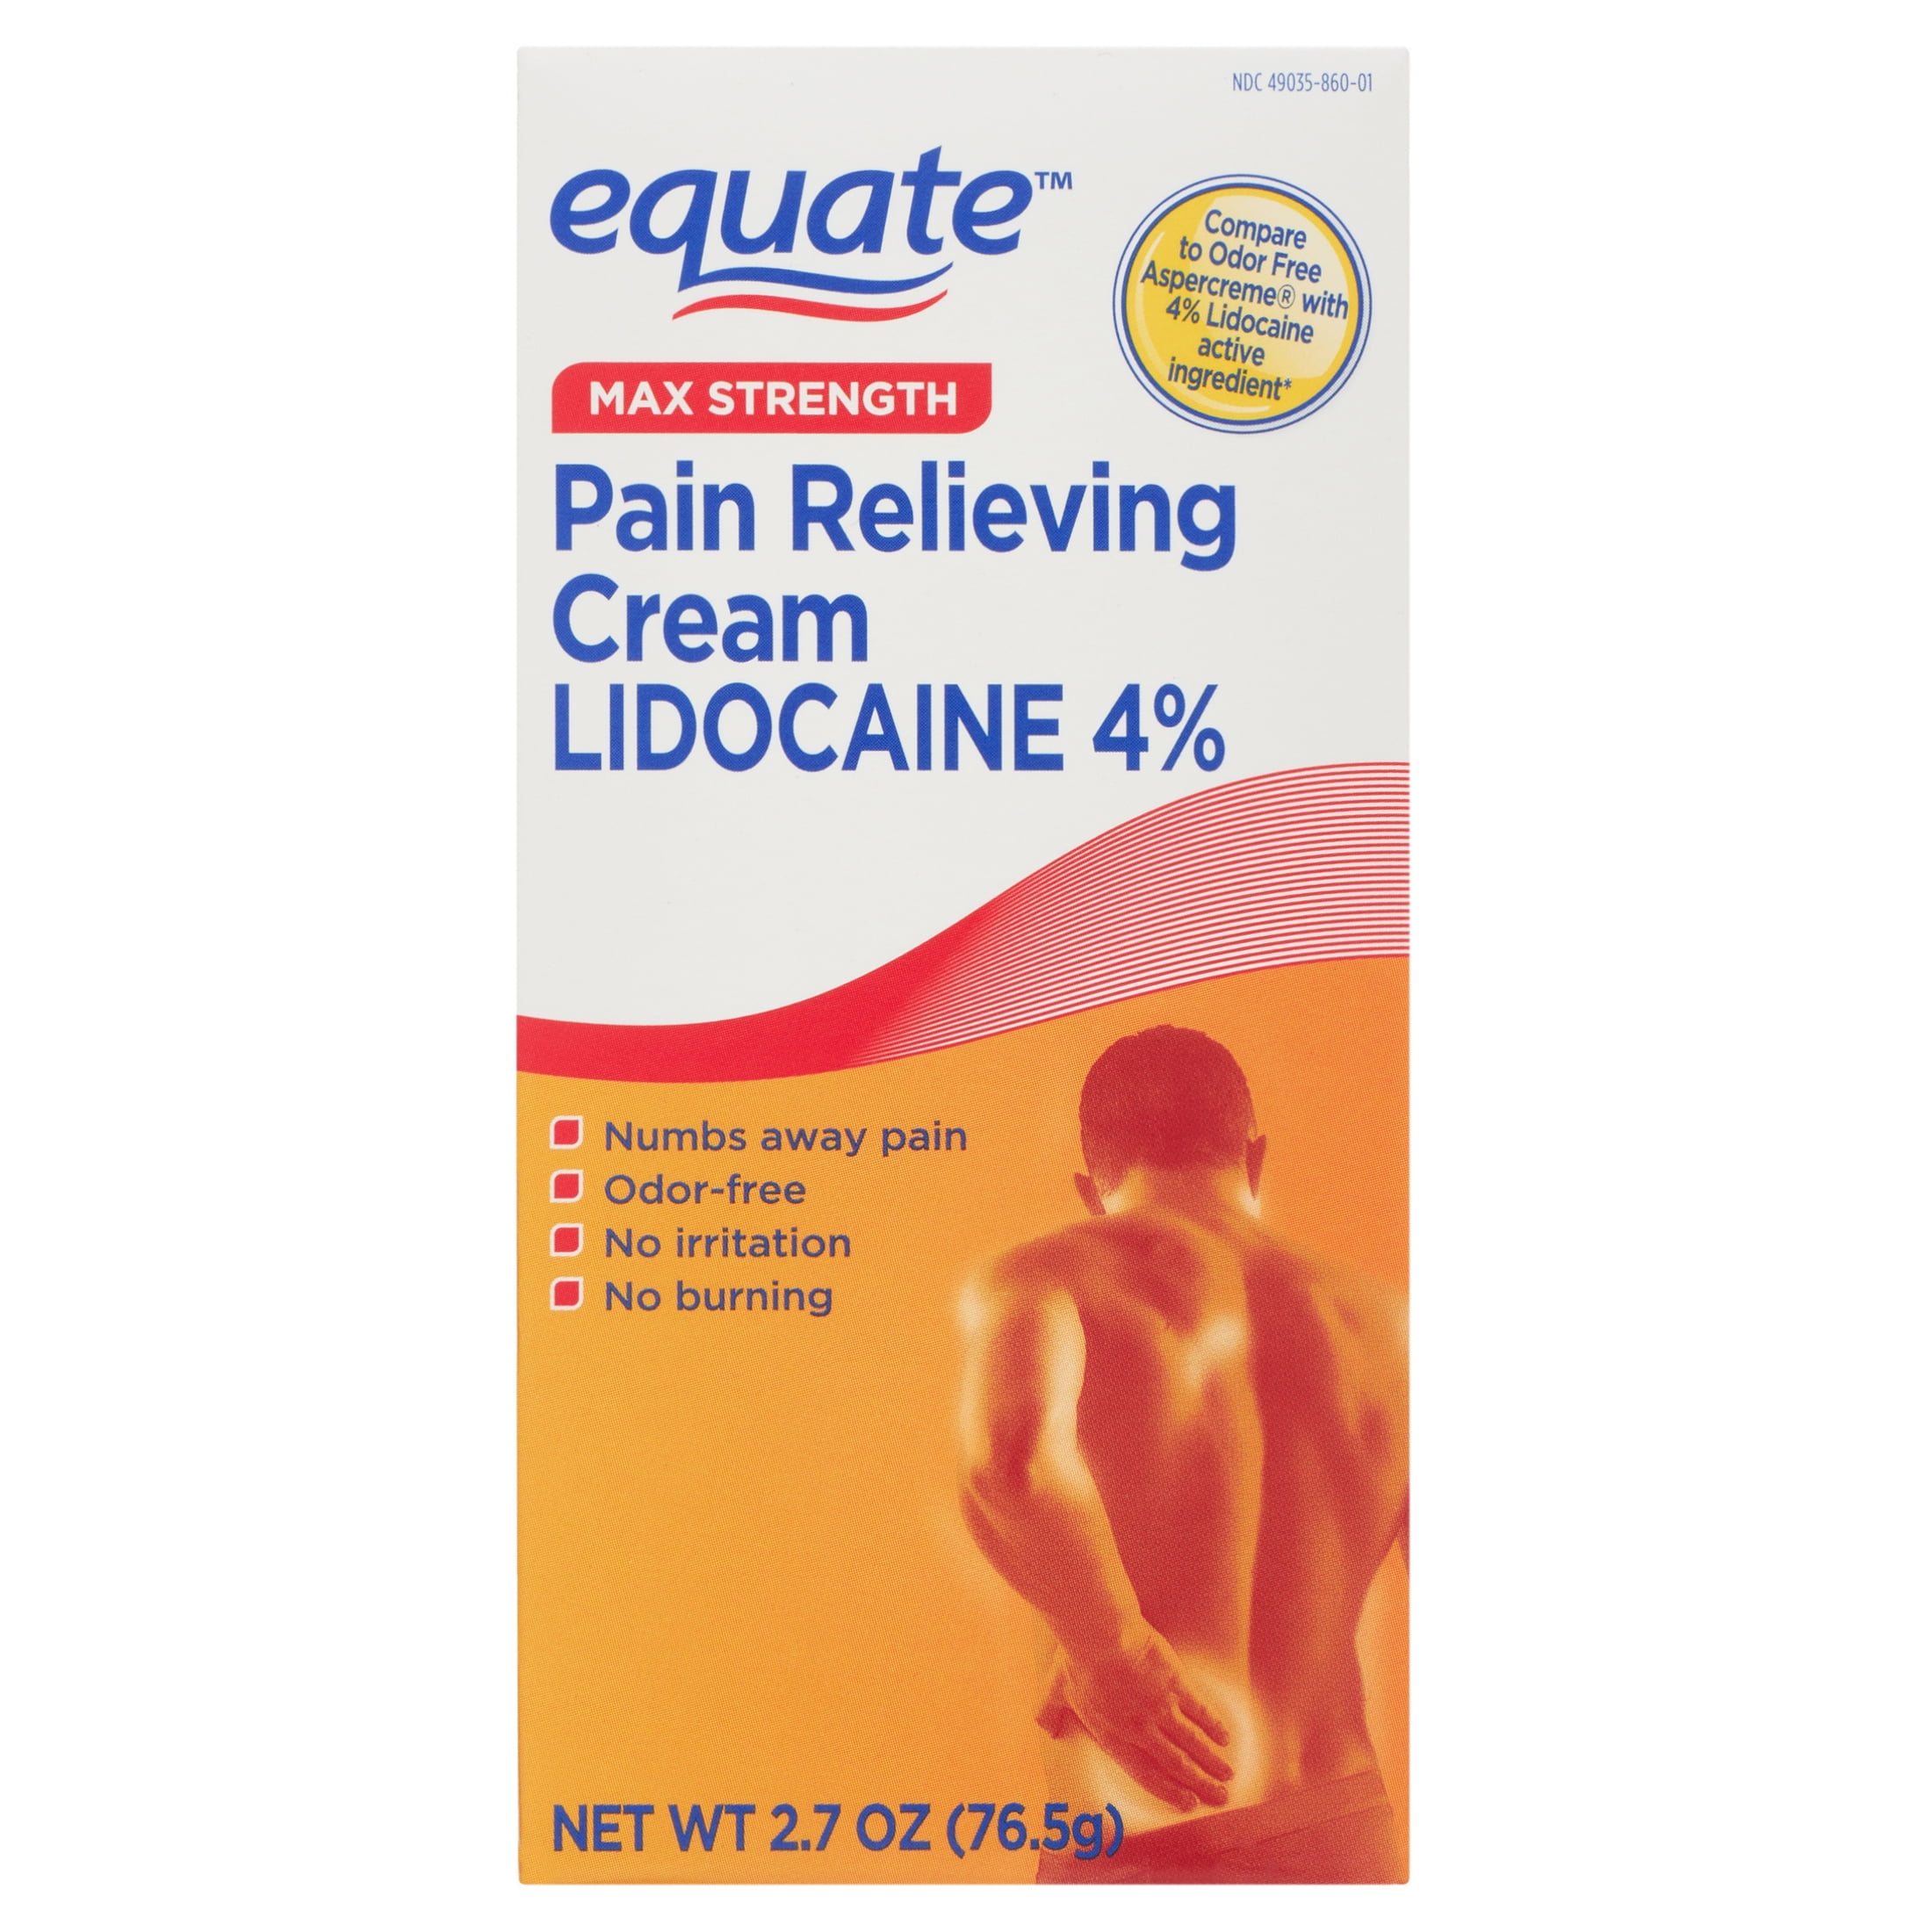 Equate Max Strength Lidocaine Pain Relieving Cream, 2.7 oz